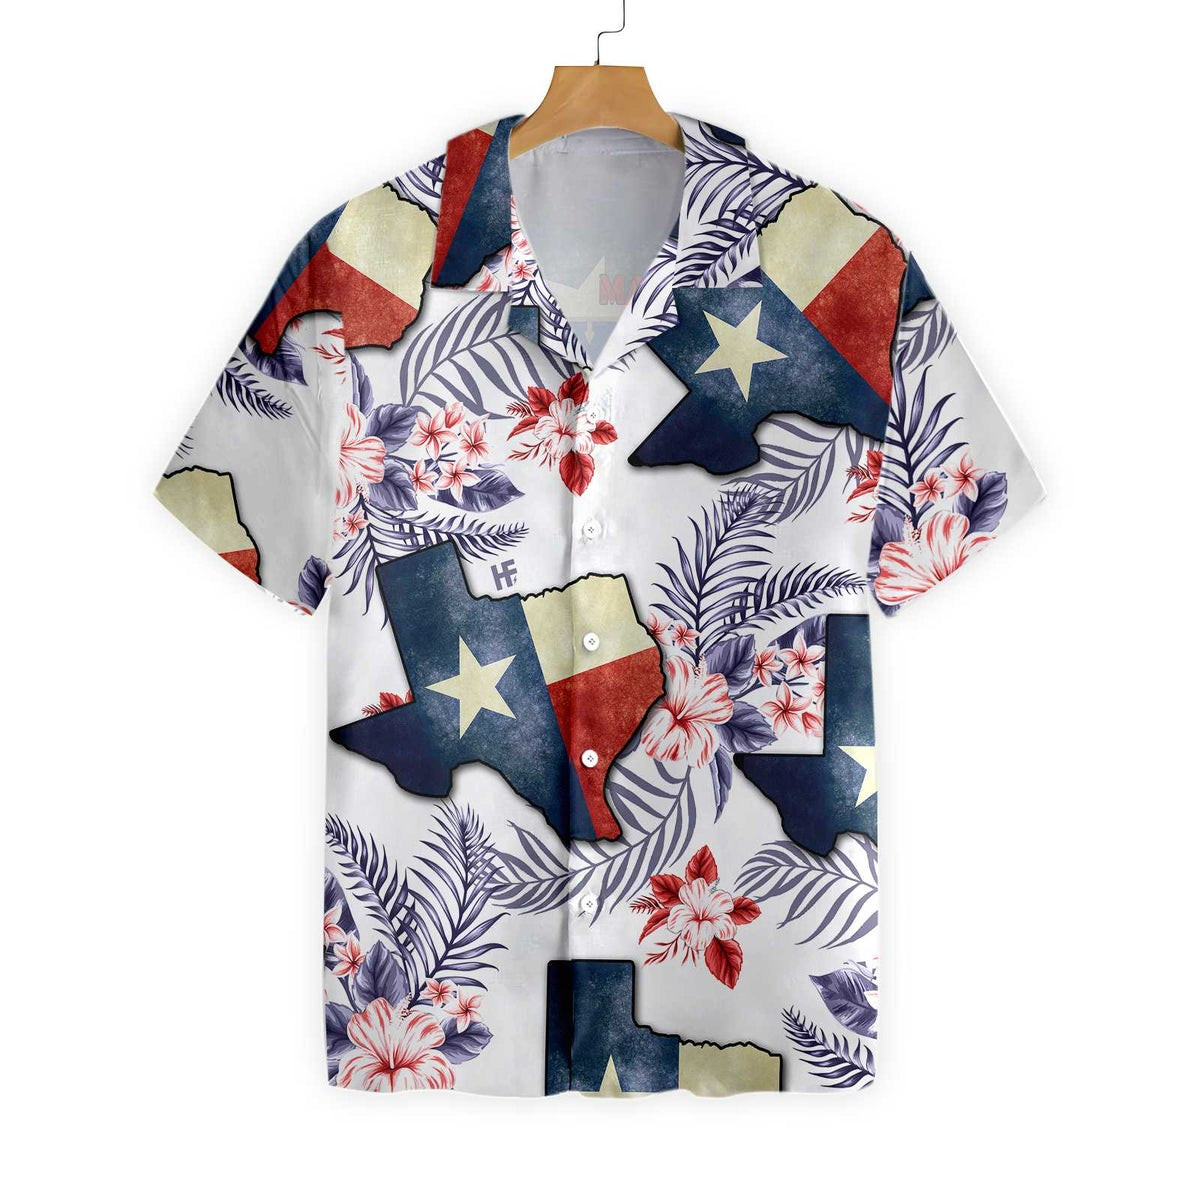 Floral Texas Hawaiian Shirt For Men Made In A Long Time Ago Texas State Shirt Proud Texas Flag Shirt for Men